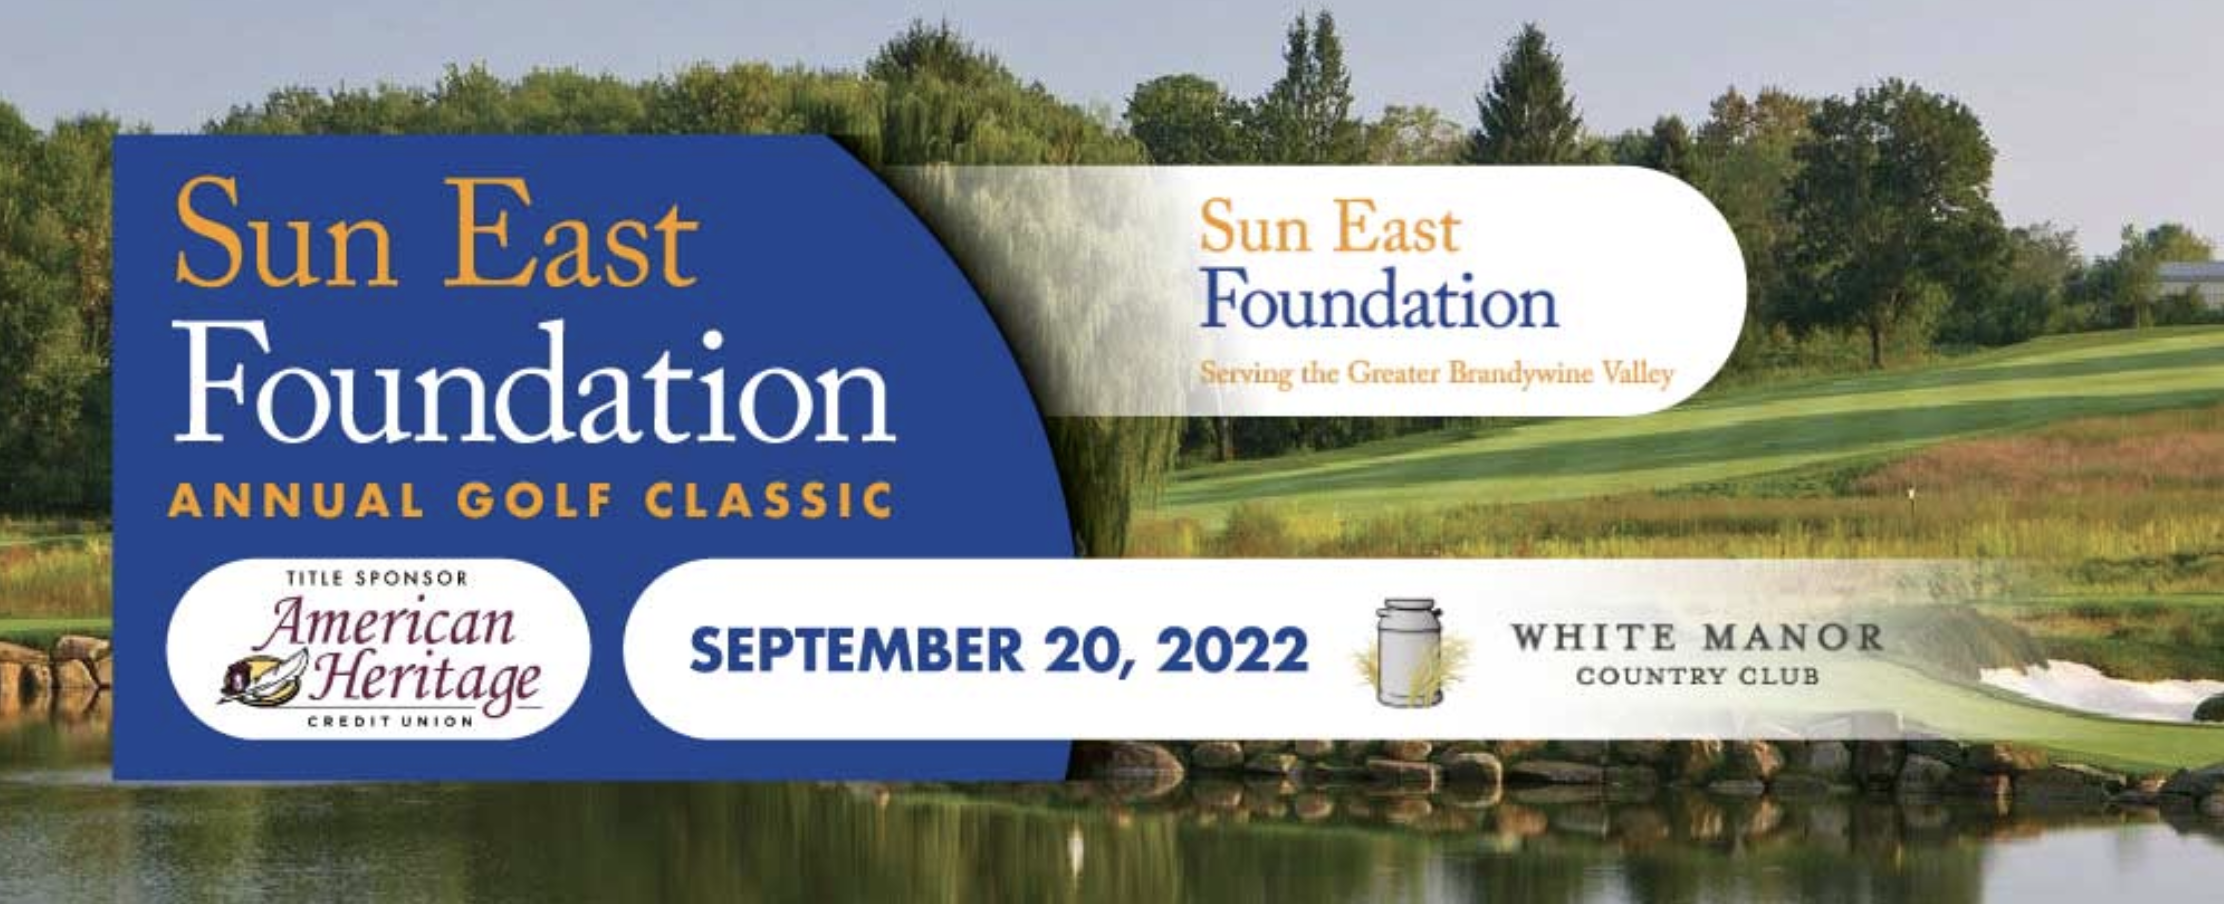 Sun East Foundation Annual Golf Classic - Veterans Outreach Ministries